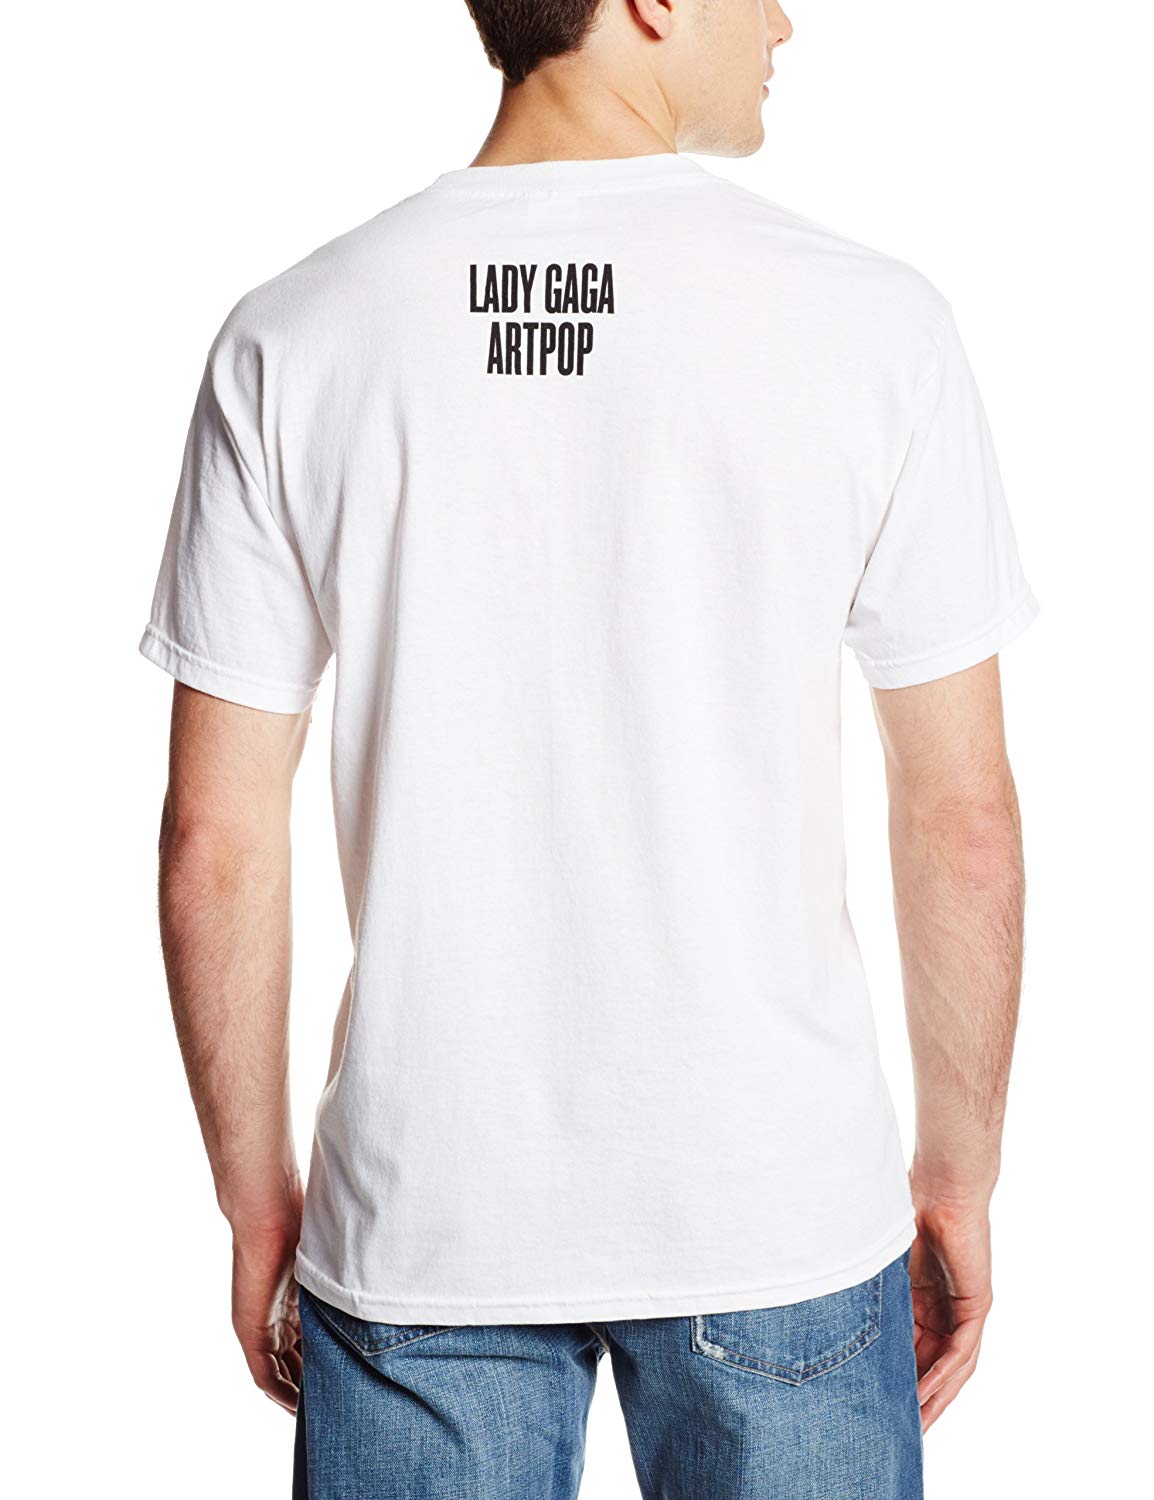 LADY GAGA Art Pop Teaser T-Shirt White - image 2 of 2